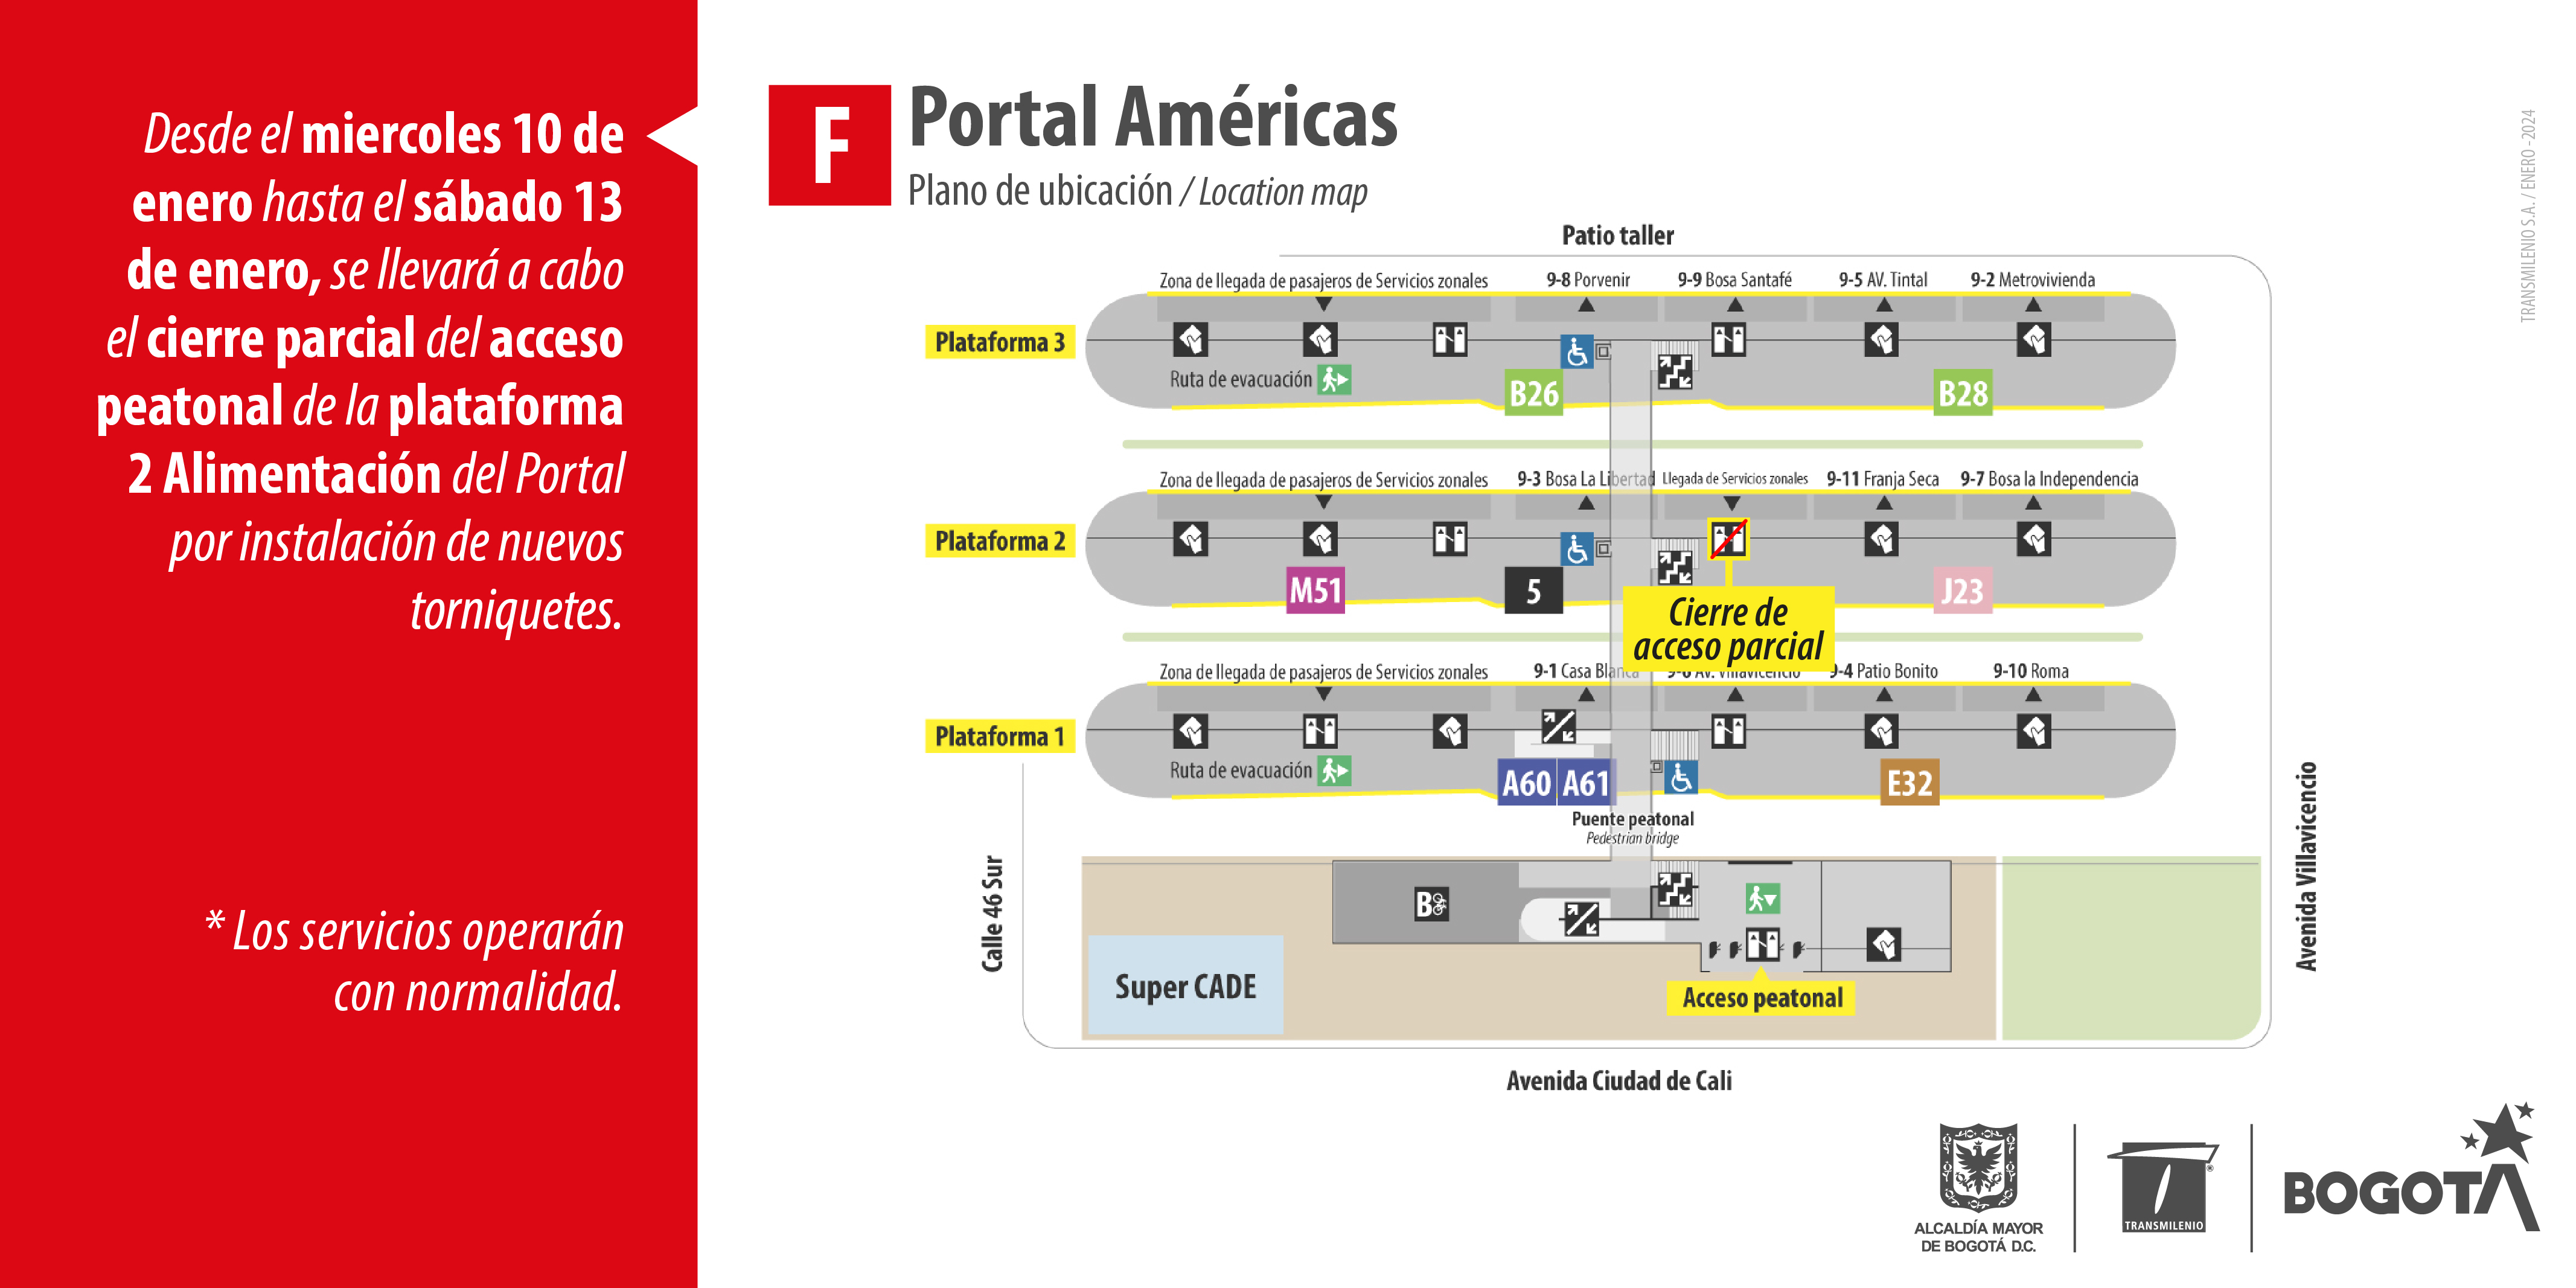 Portal Américas